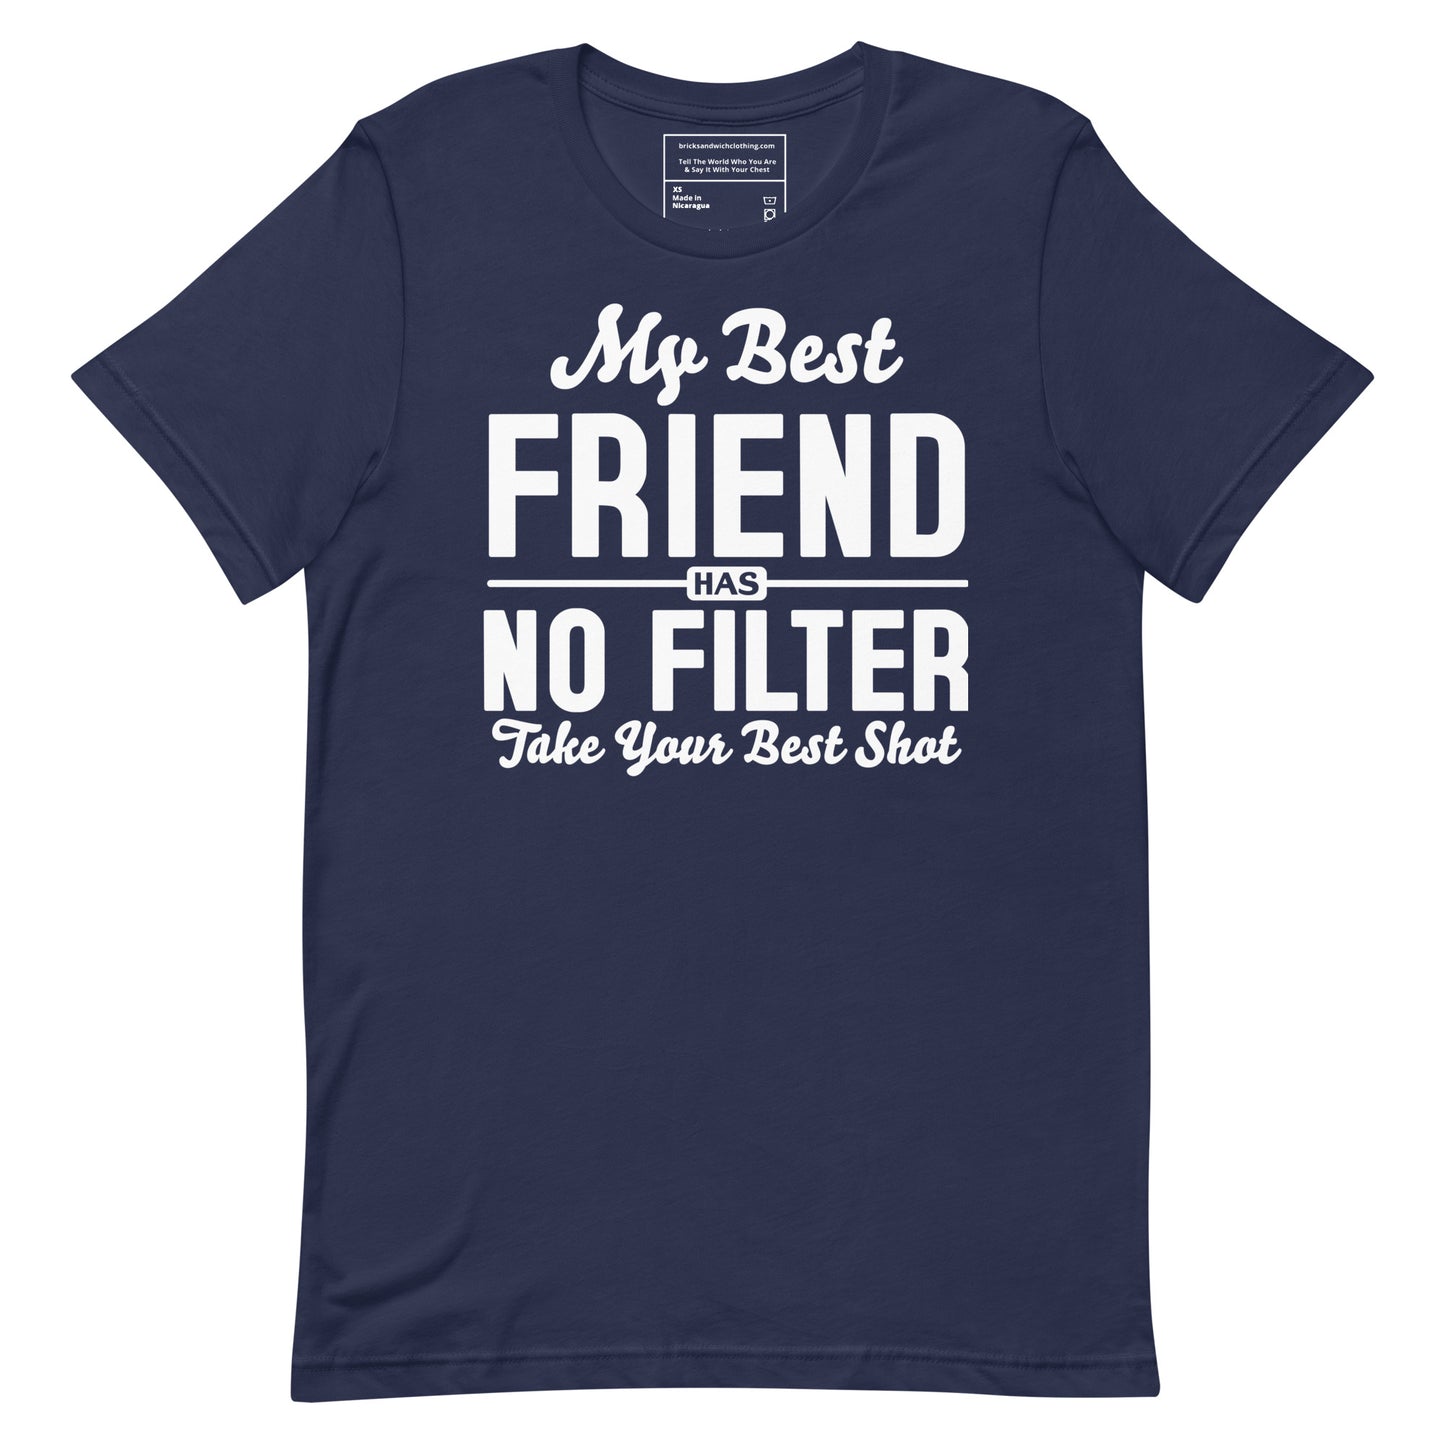 My Best Friend Has No Filter T-Shirt White Ink